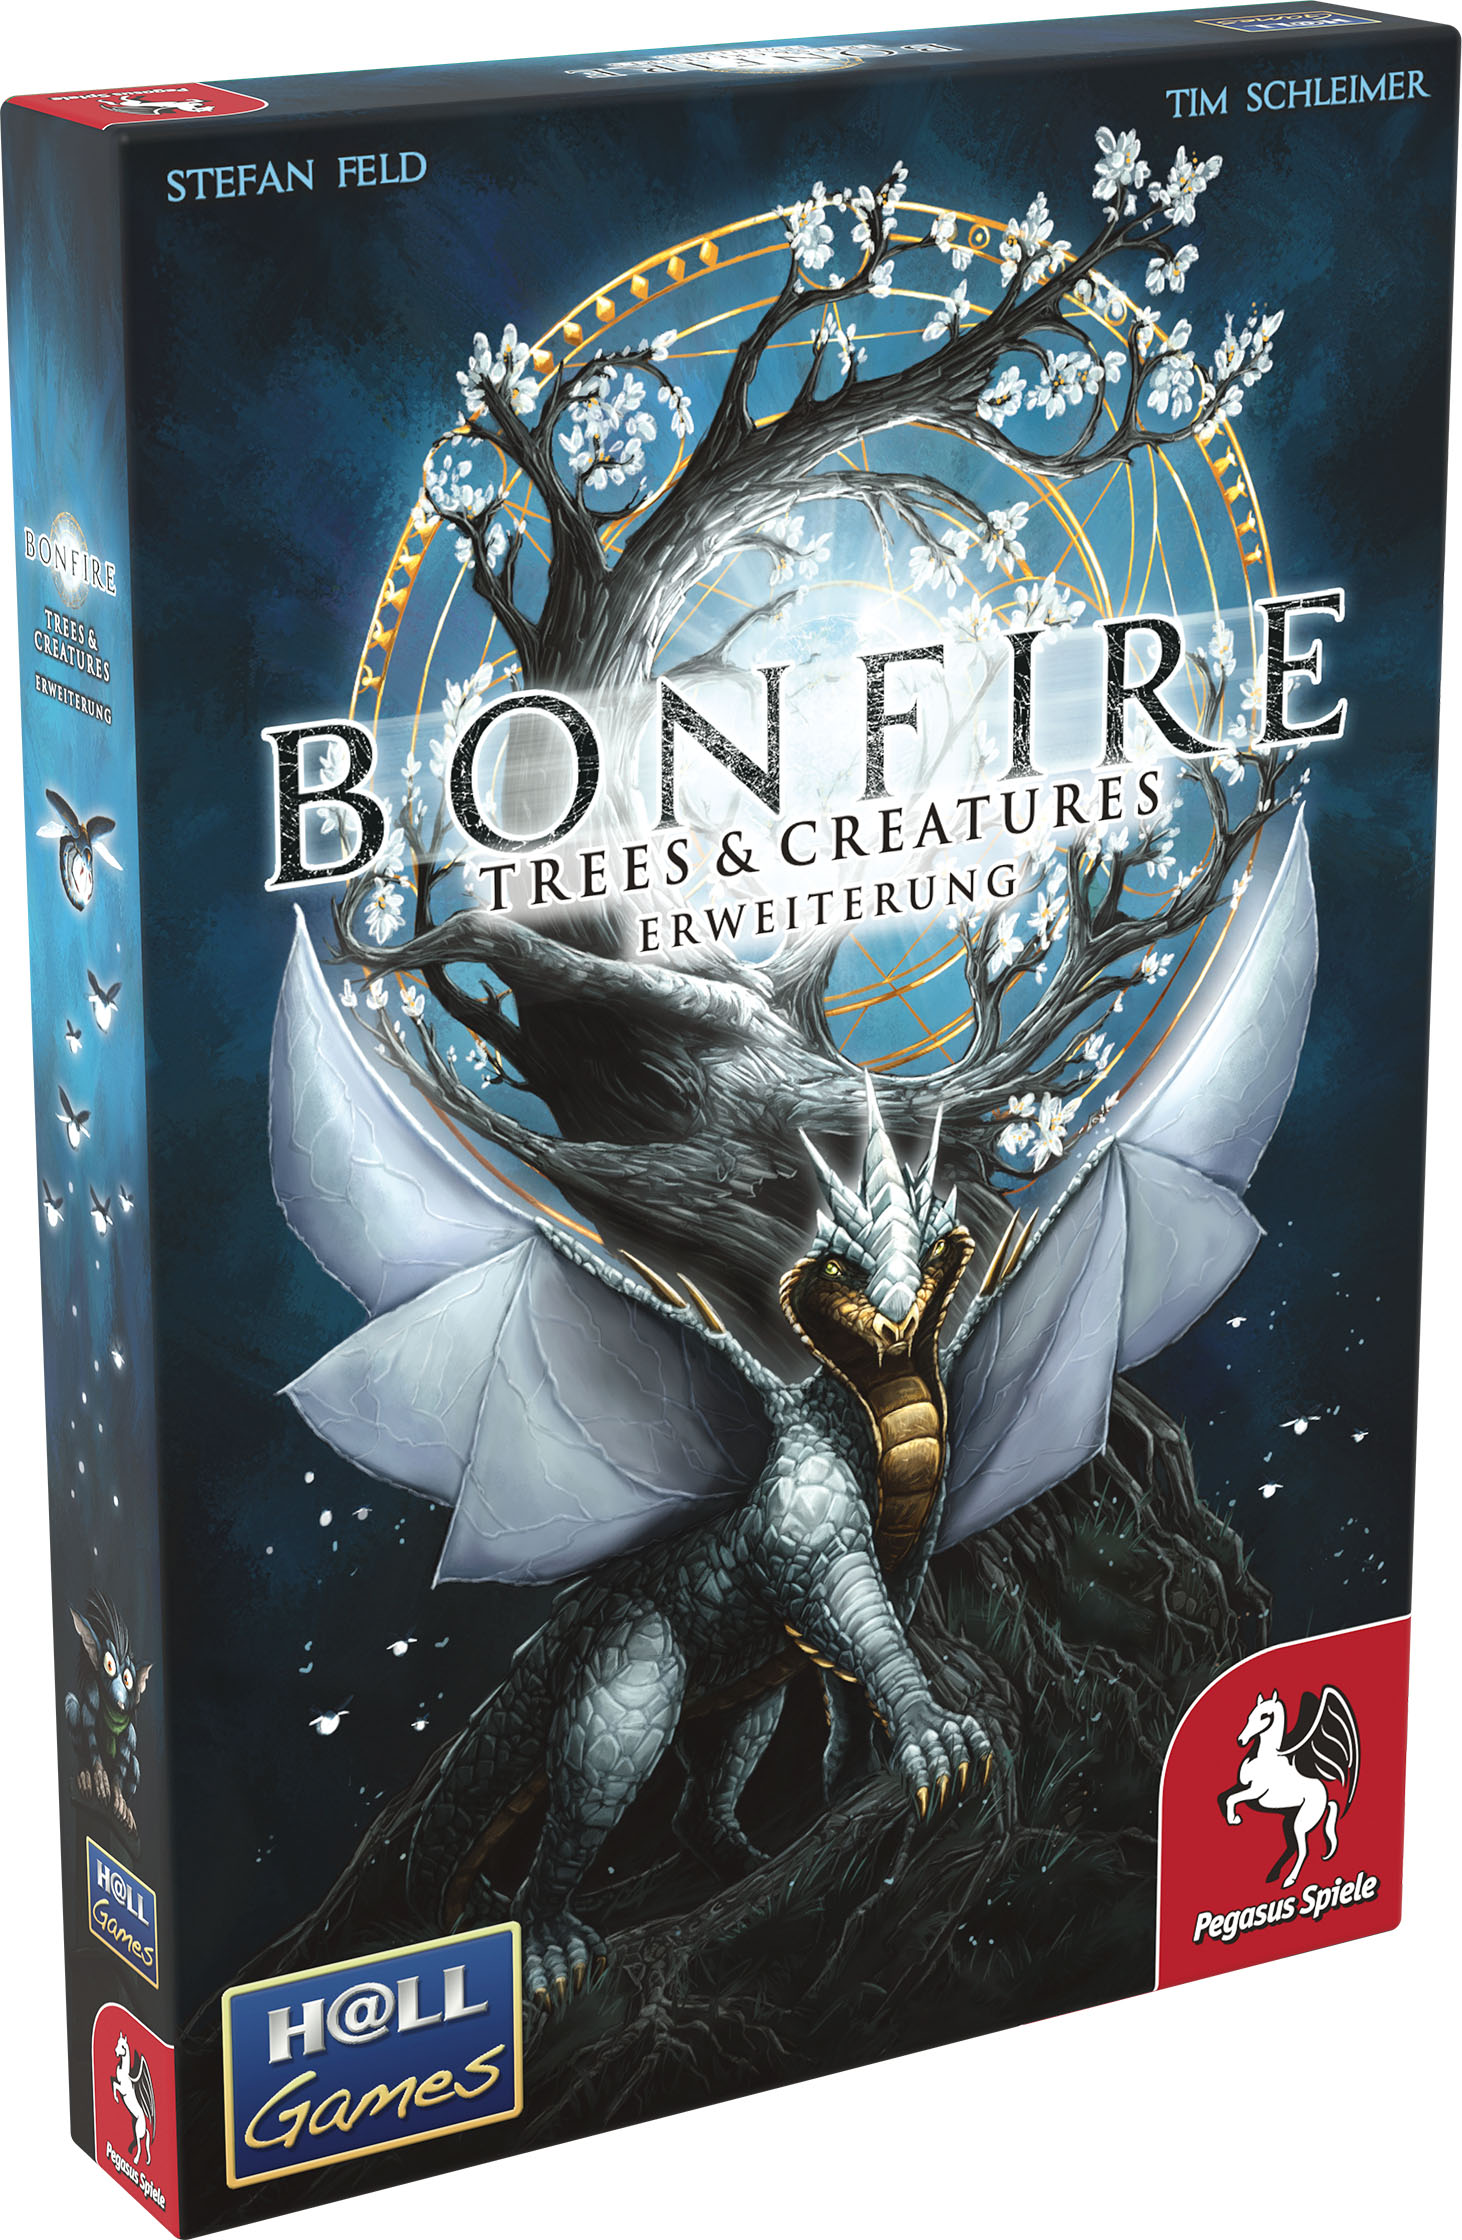 Bonfire - Image Two